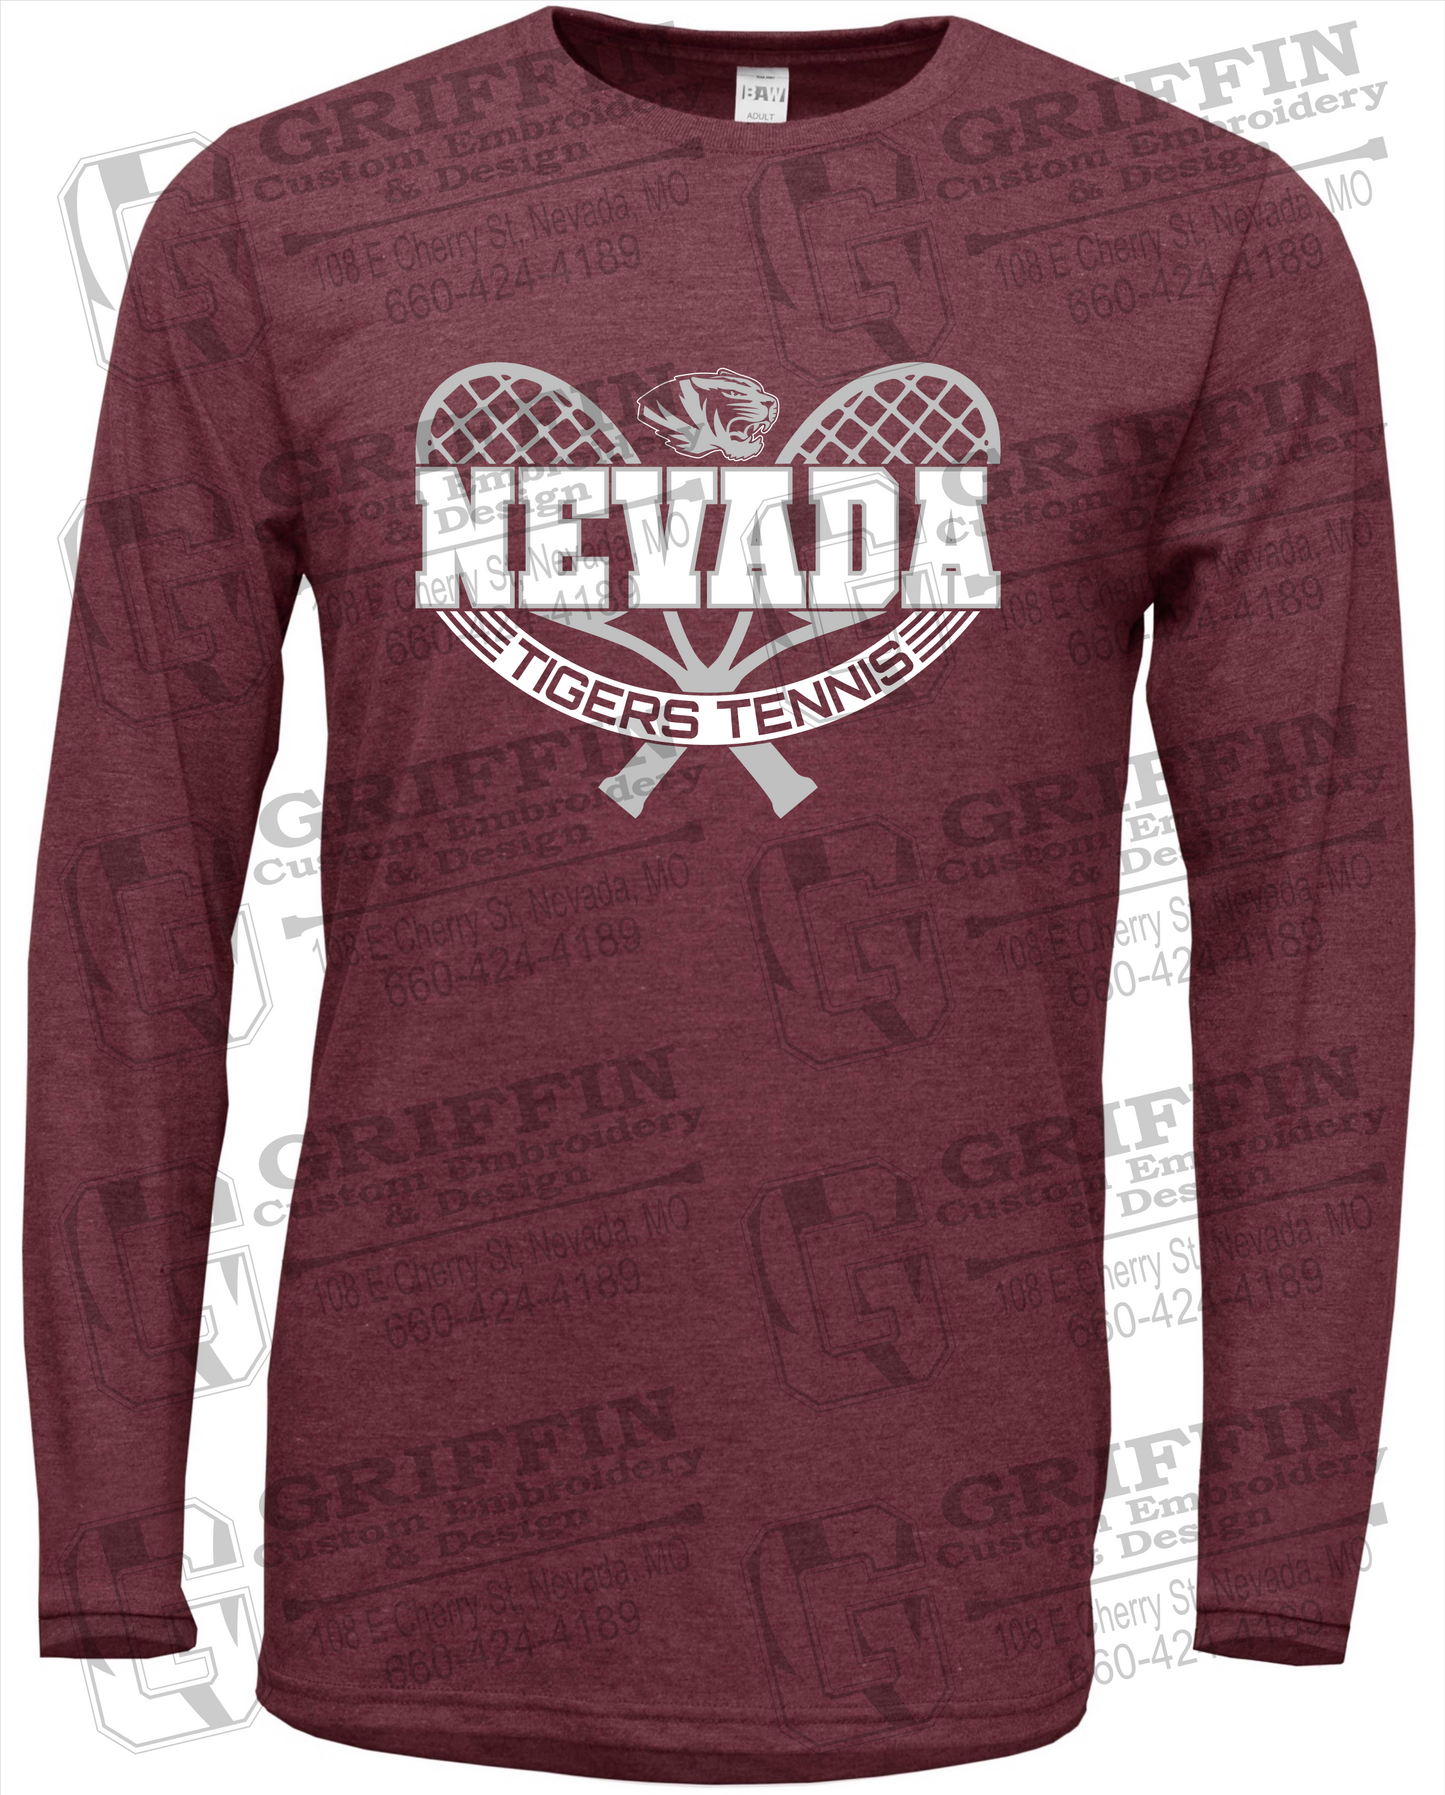 Soft-Tek Long Sleeve T-Shirt - Tennis - Nevada Tigers 21-Y